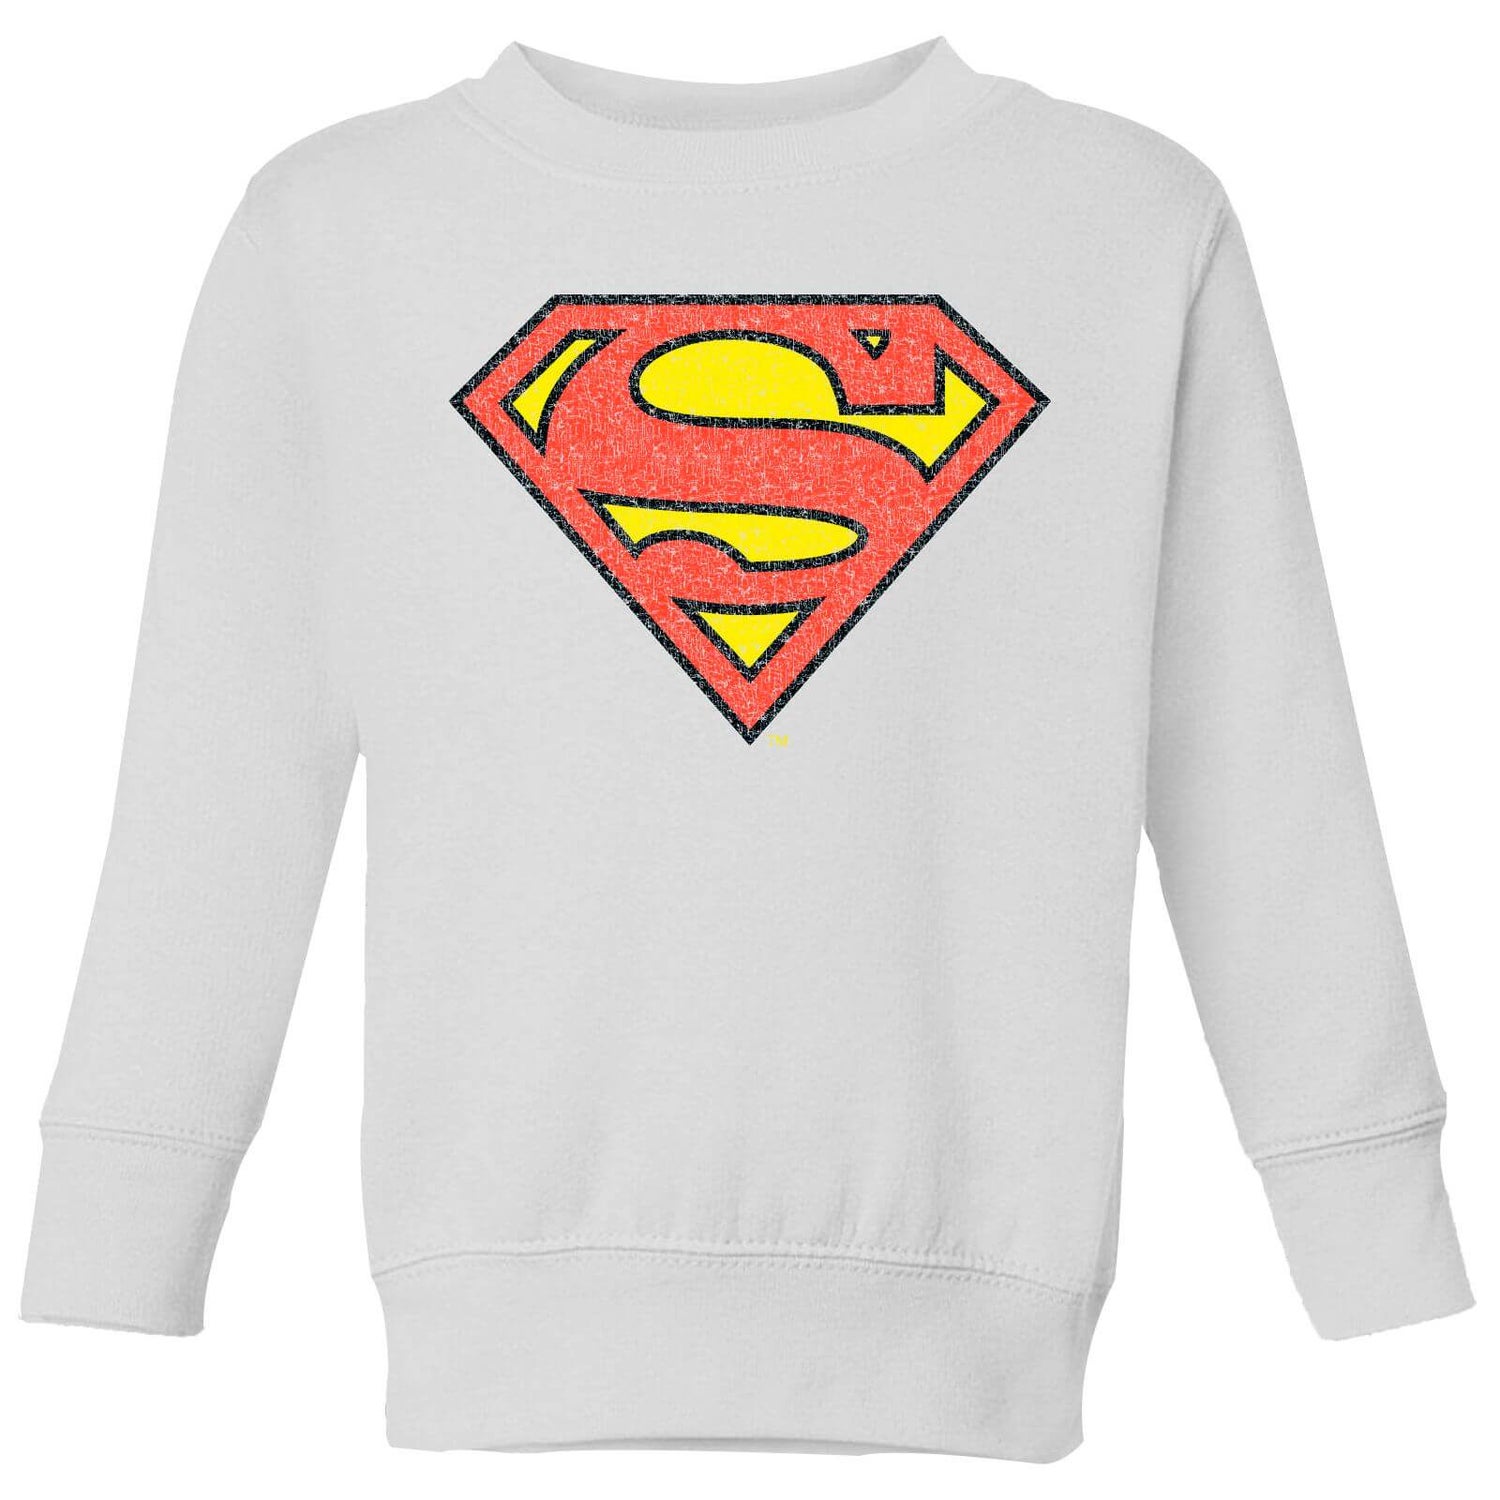 Official Superman Crackle Logo Kids' Sweatshirt - White